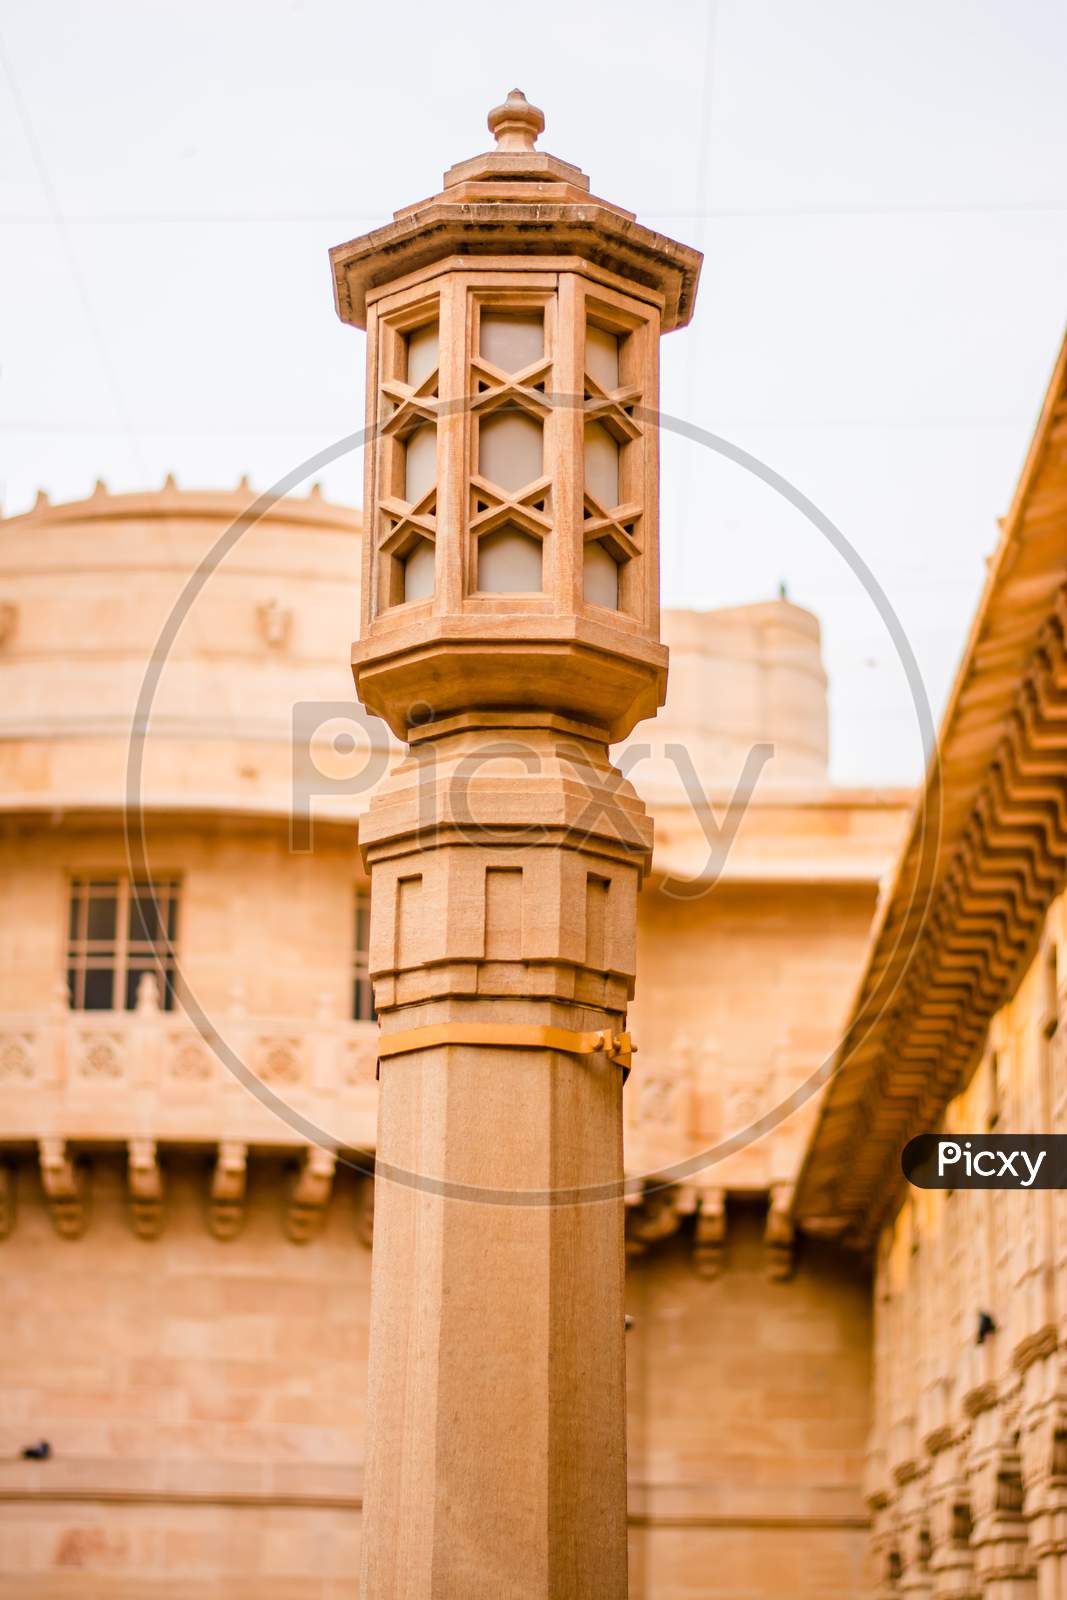 Light Poll of Umaid bhawan palace jodhpur